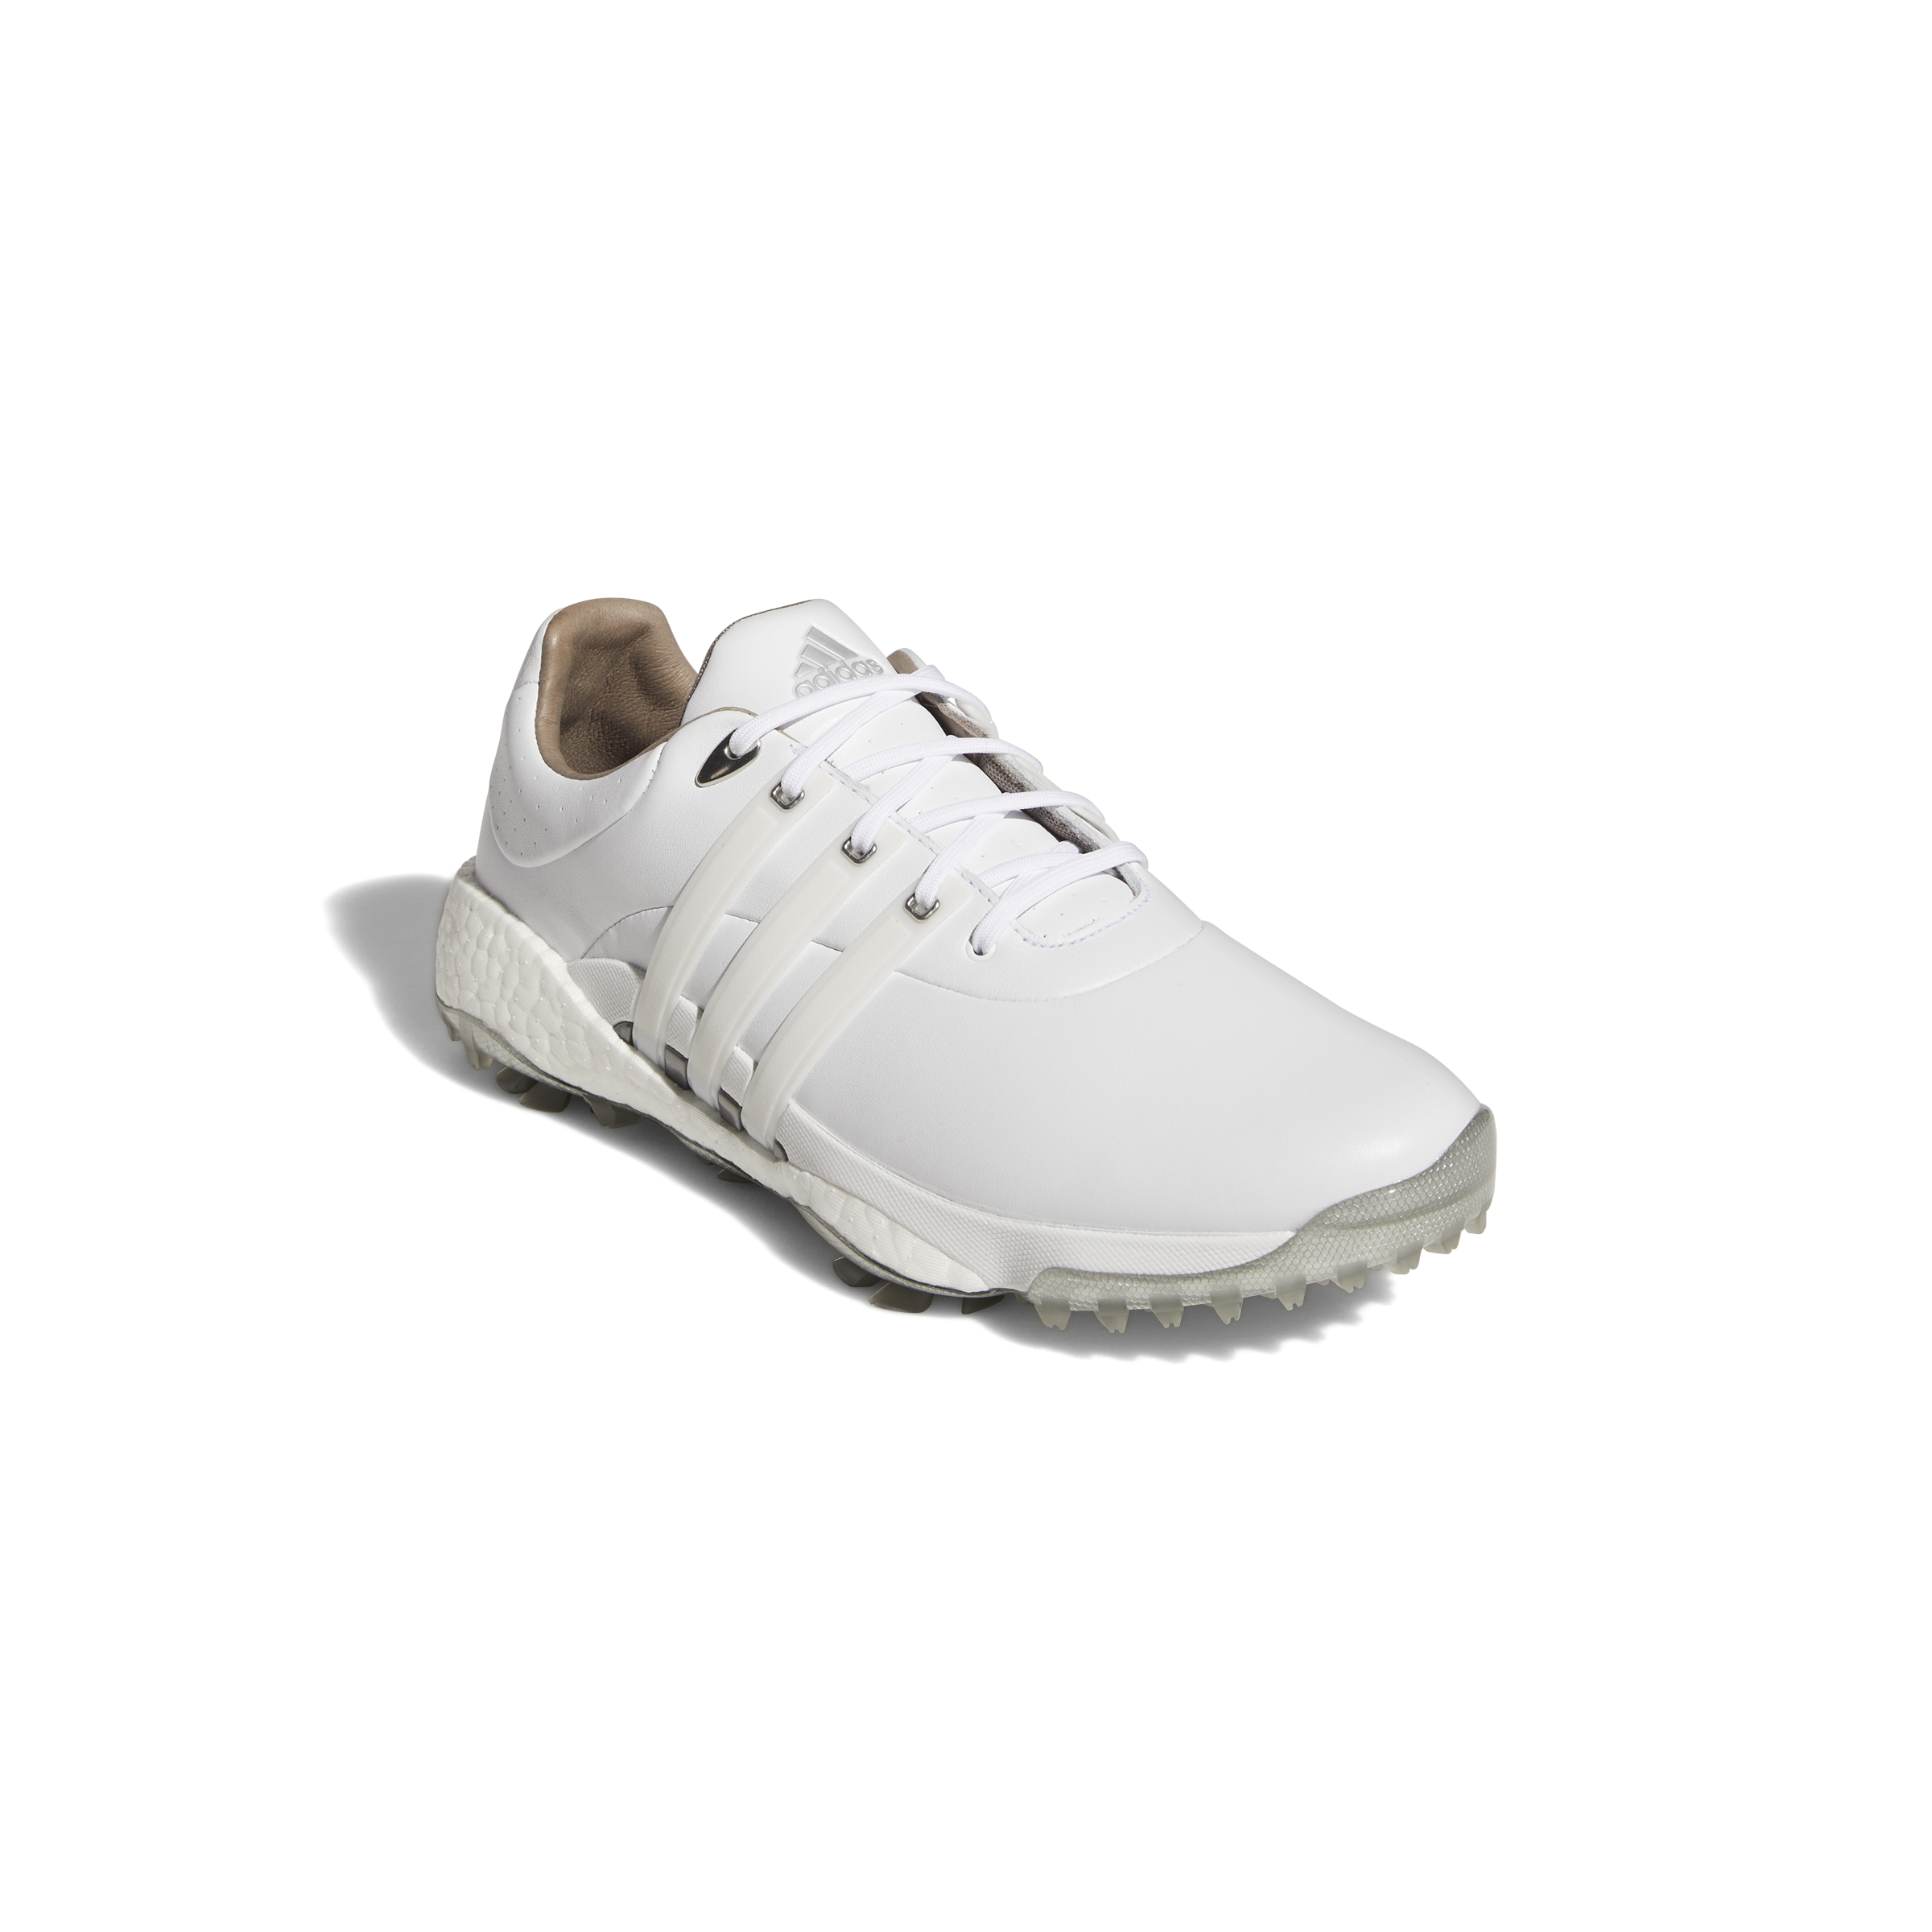 Men's Adidas Tour360 22 - GV7245 White Silver - Duncan Lambert Golf Shop